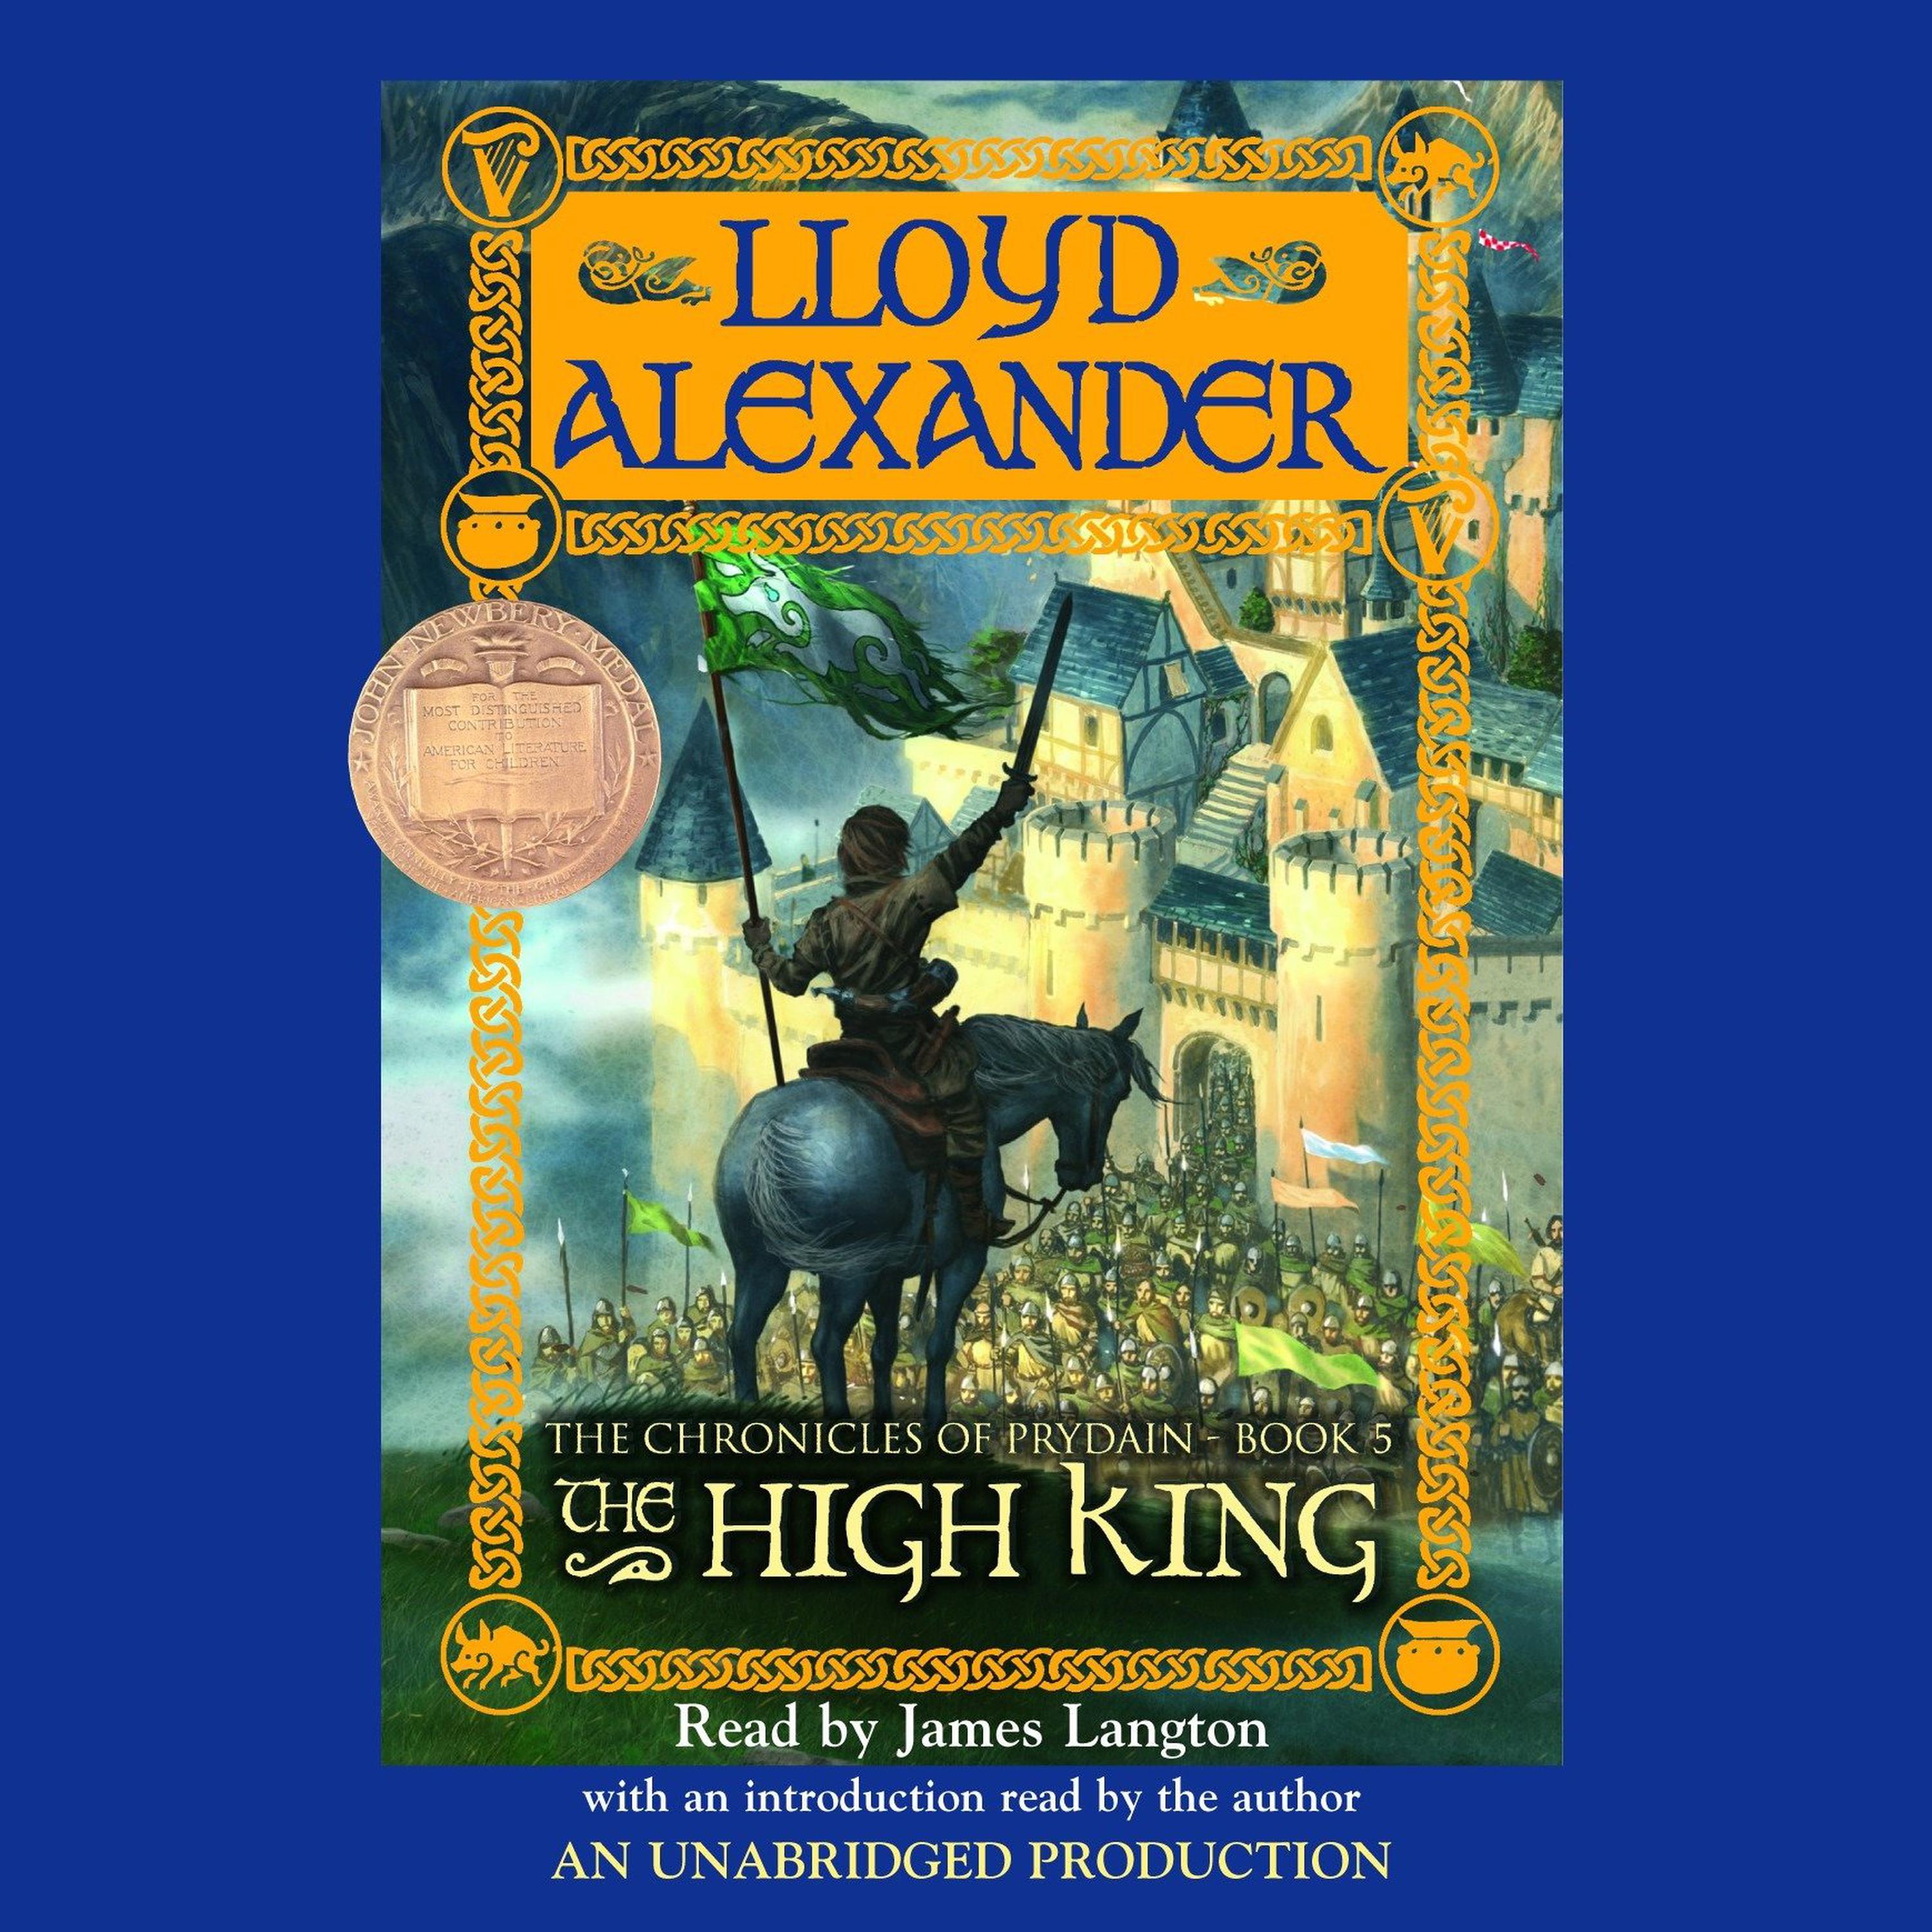 The high kings. Хай Кингс. The Summer King Chronicles. Книга трех Ллойд Александер. Придейн.